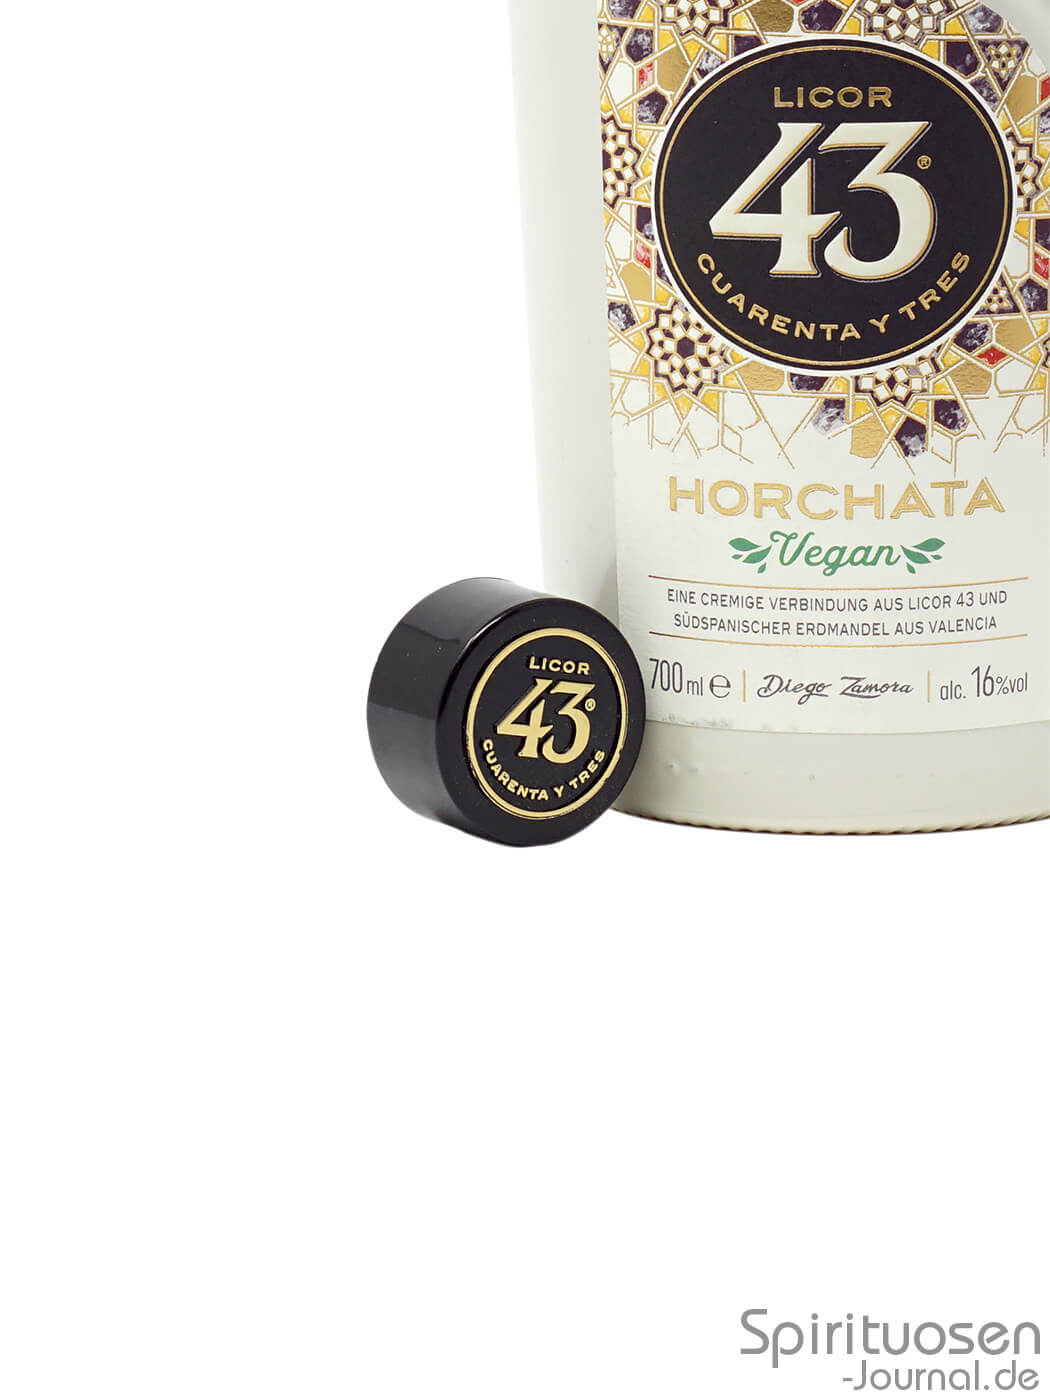 Licor 43 Horchata im Test: Veganer „Cremelikör“ für jedermann –